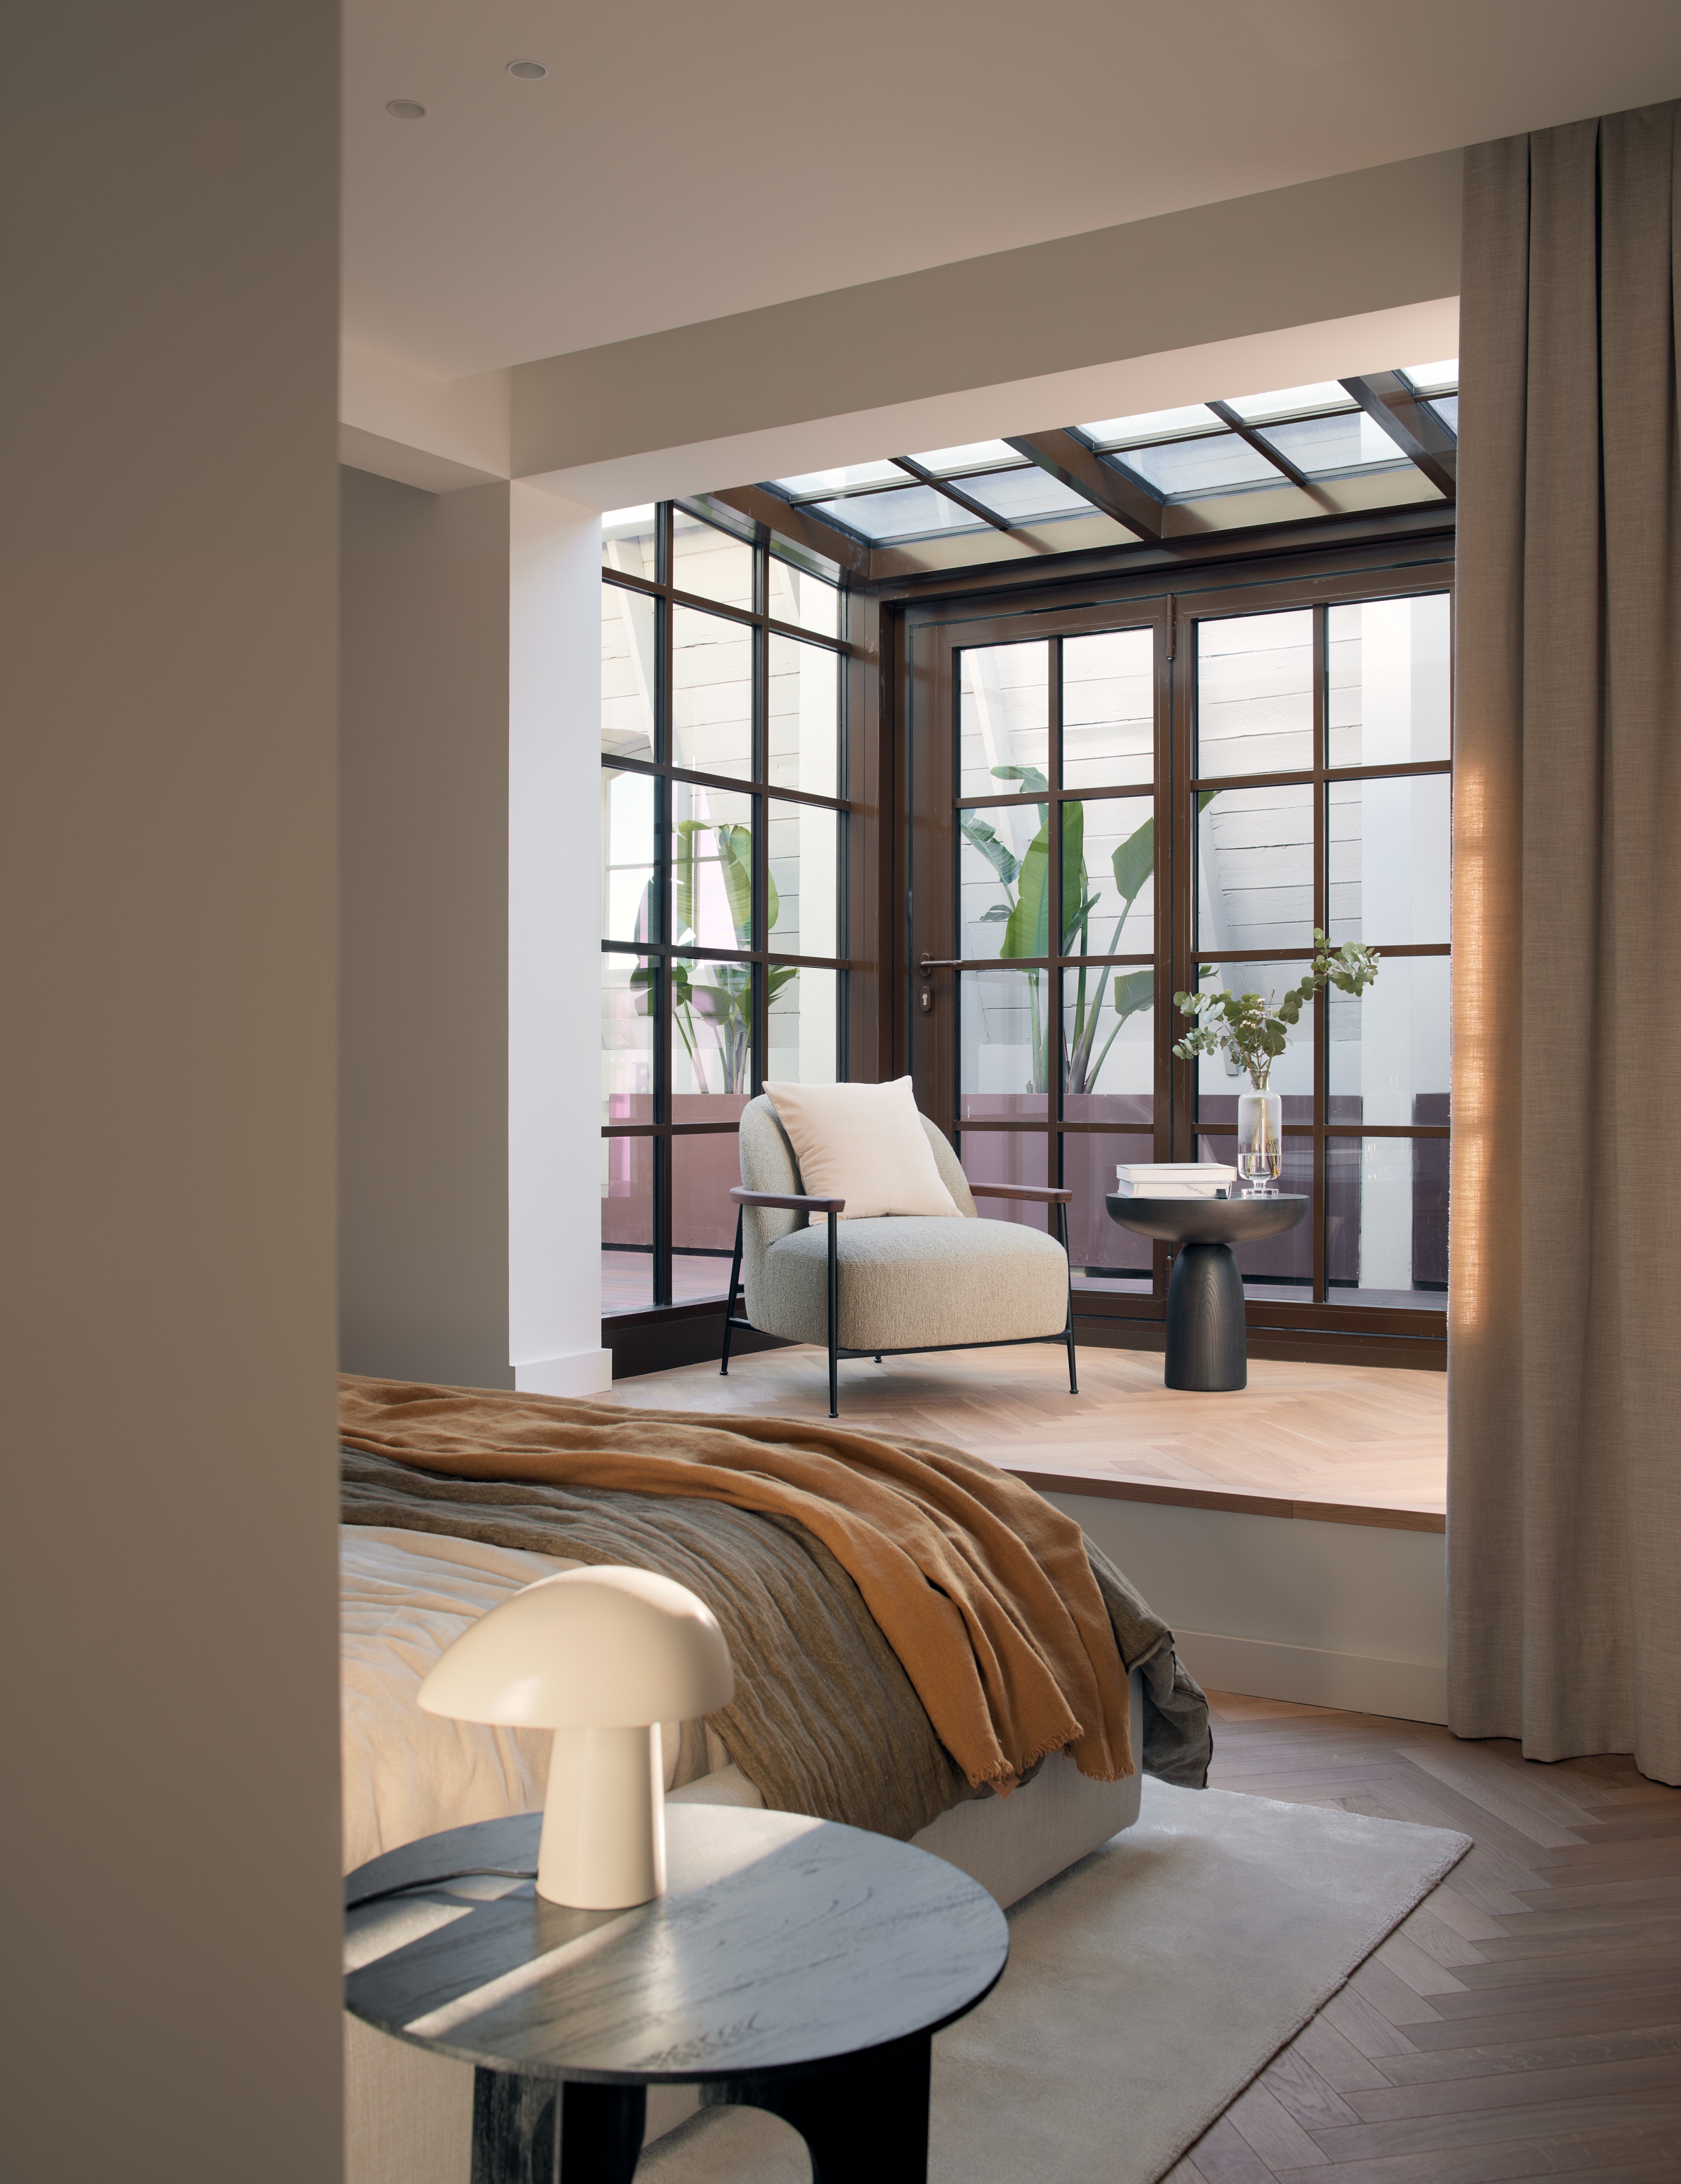 Pedralbes AV. Penthouse LUV Studio Bedroom 1 - LUV Studio - Architecture et design - Barcelone